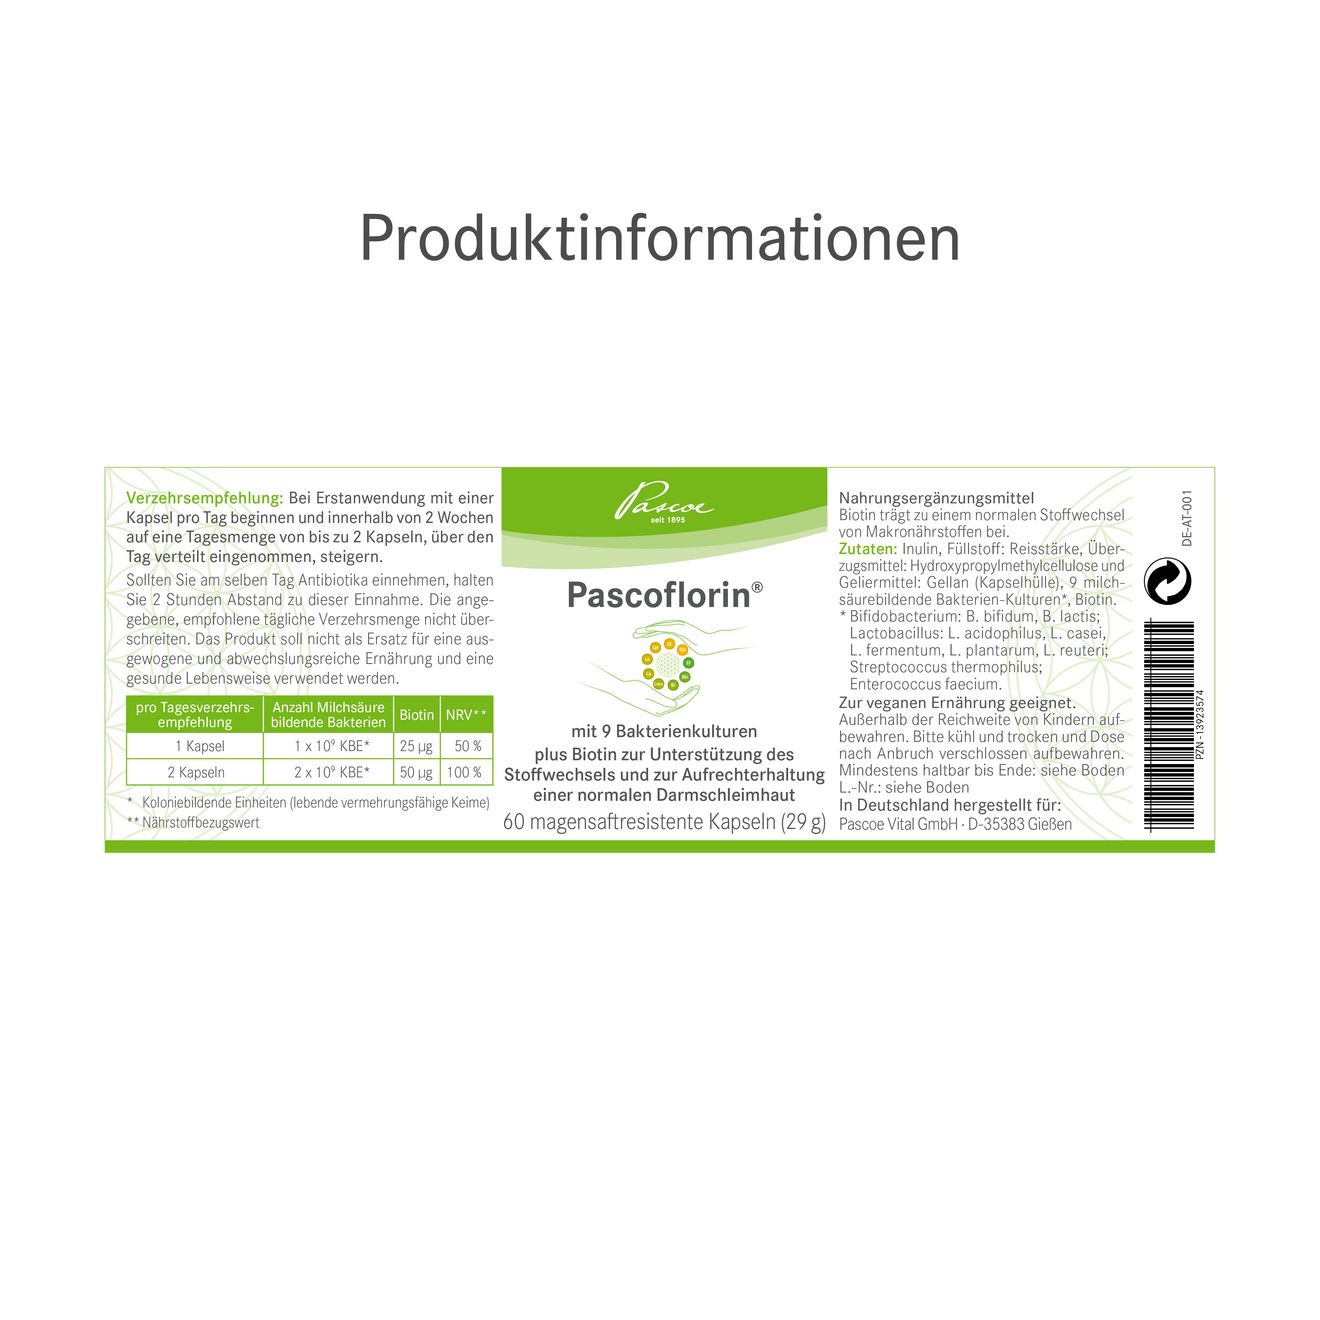 Pascoflorin Produktinformationen